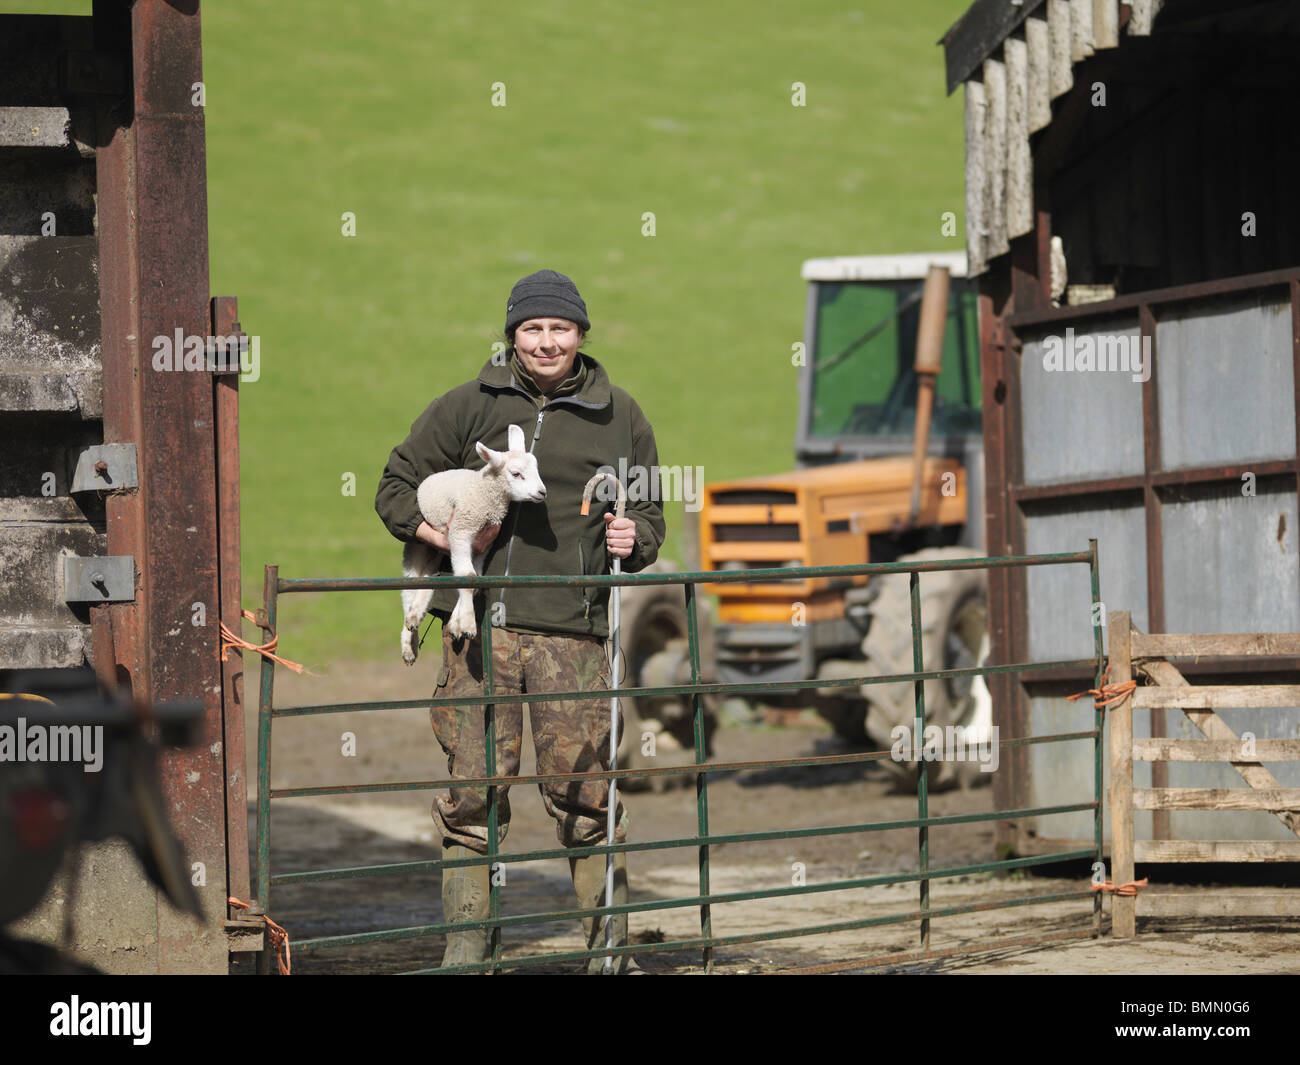 Farmer holding lamb and stick Stock Photo